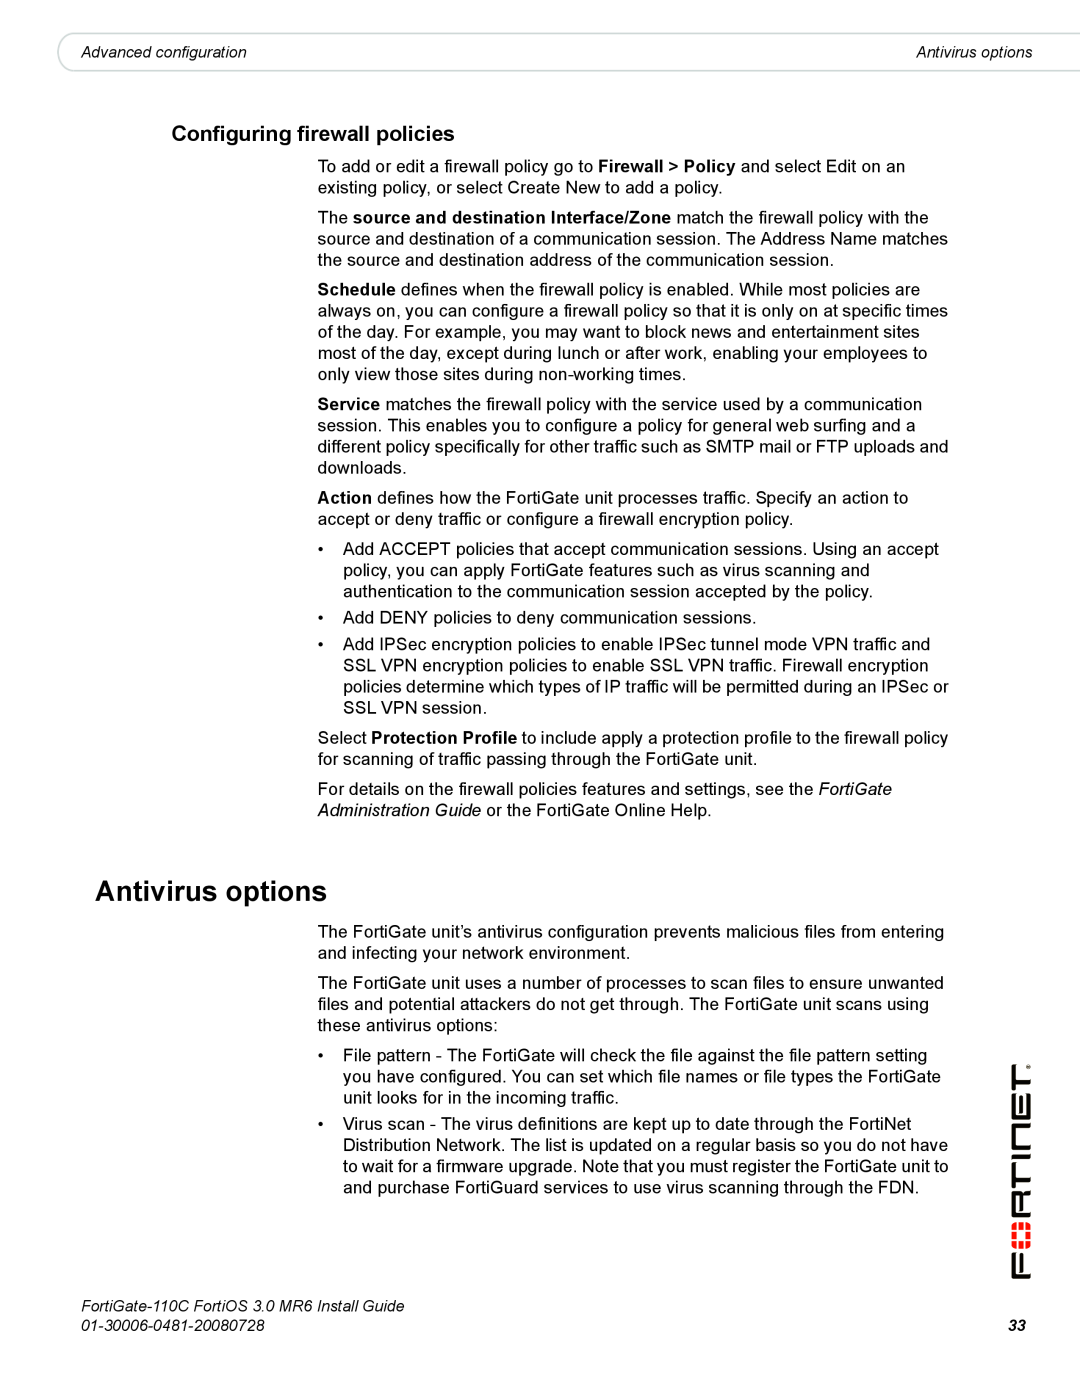 Fortinet 110C manual Antivirus options, Configuring firewall policies 